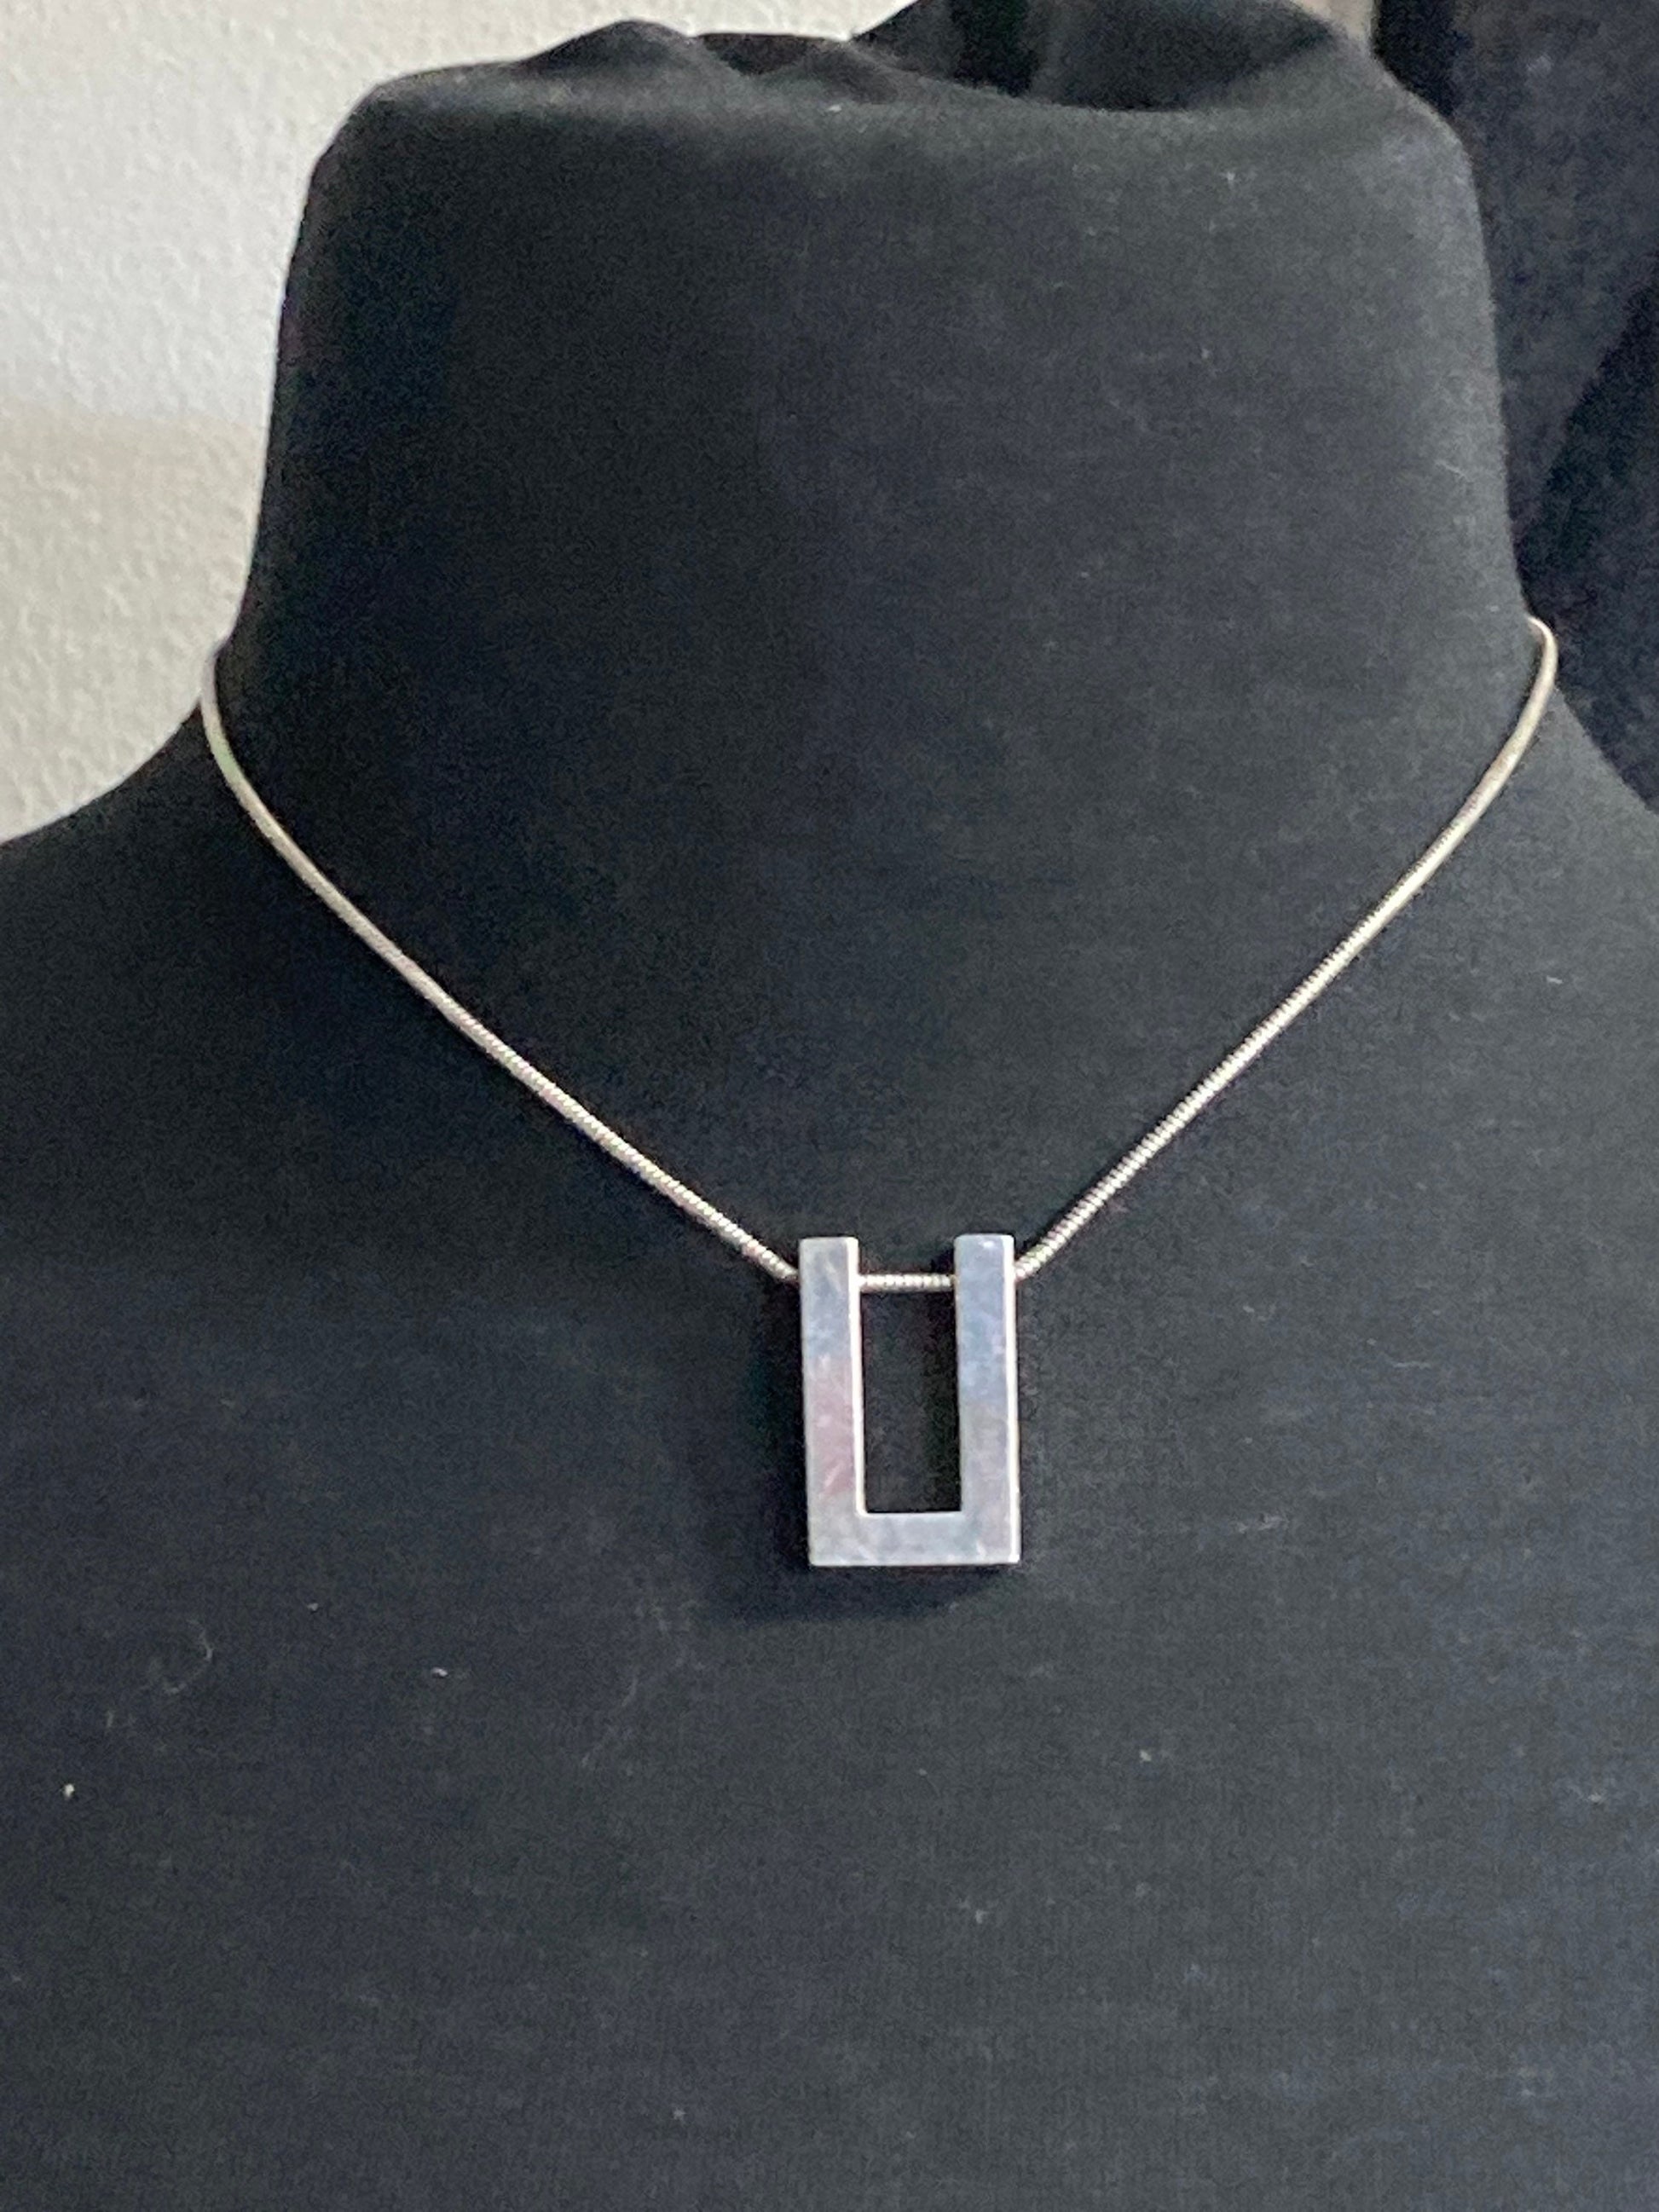 Signed SIDNEY CARRON Paris silver tone pendant and chain French designer minimalist